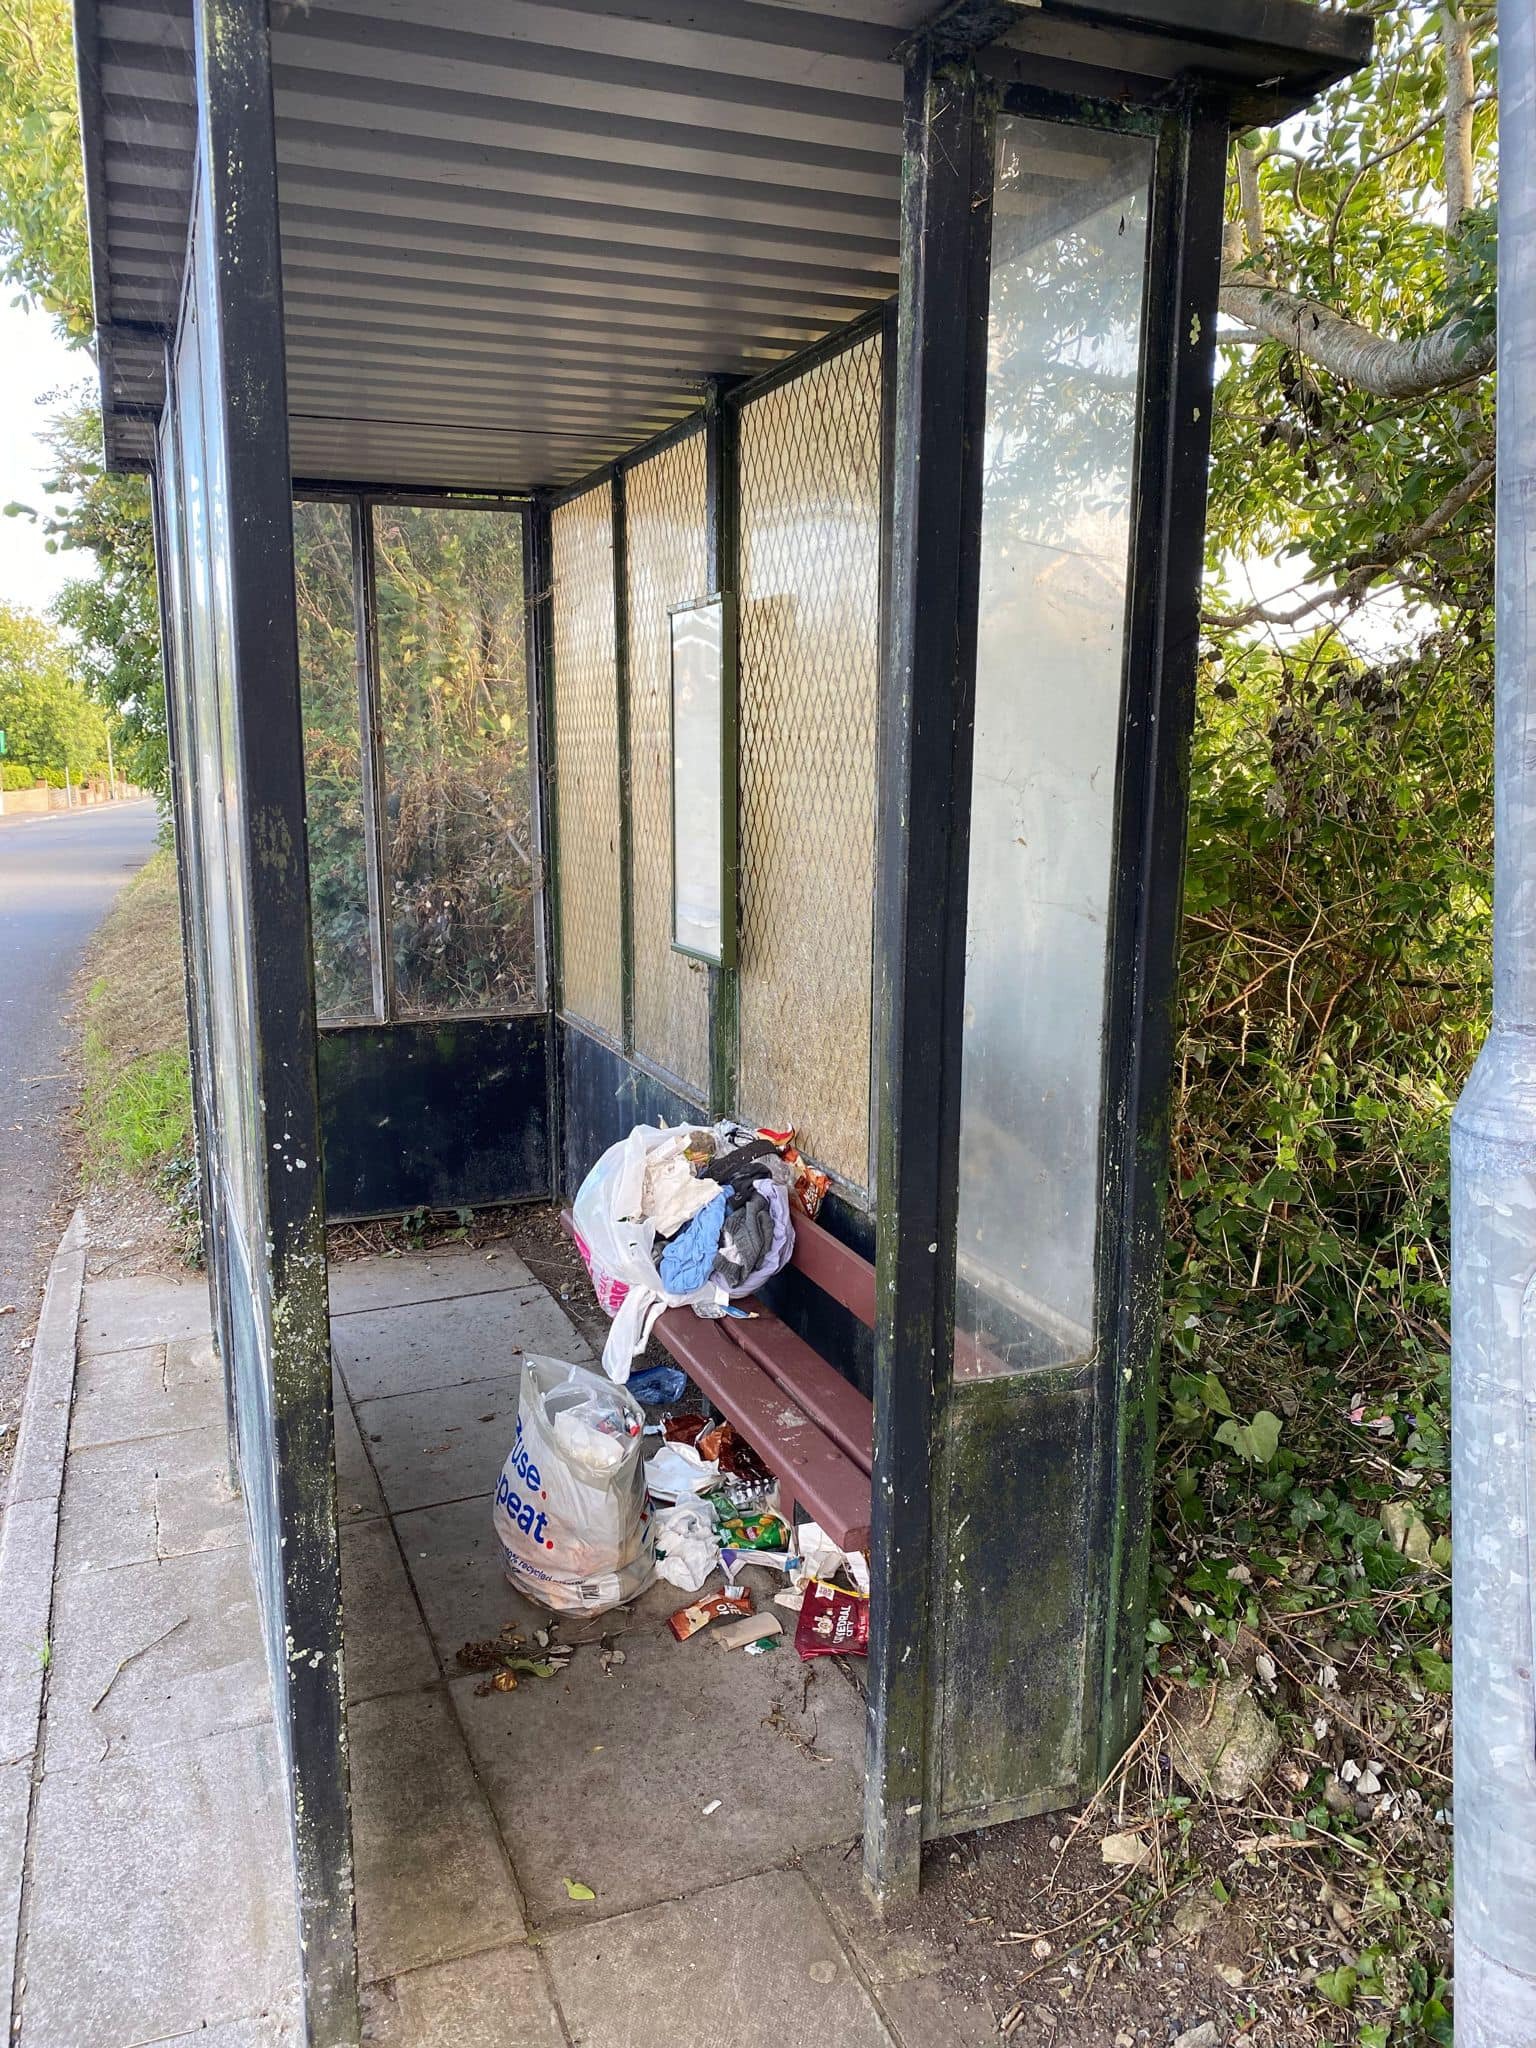 ‘Disgusting’ and ‘shoddy’ bus stops in Glamorgan in dire need of repair say residents